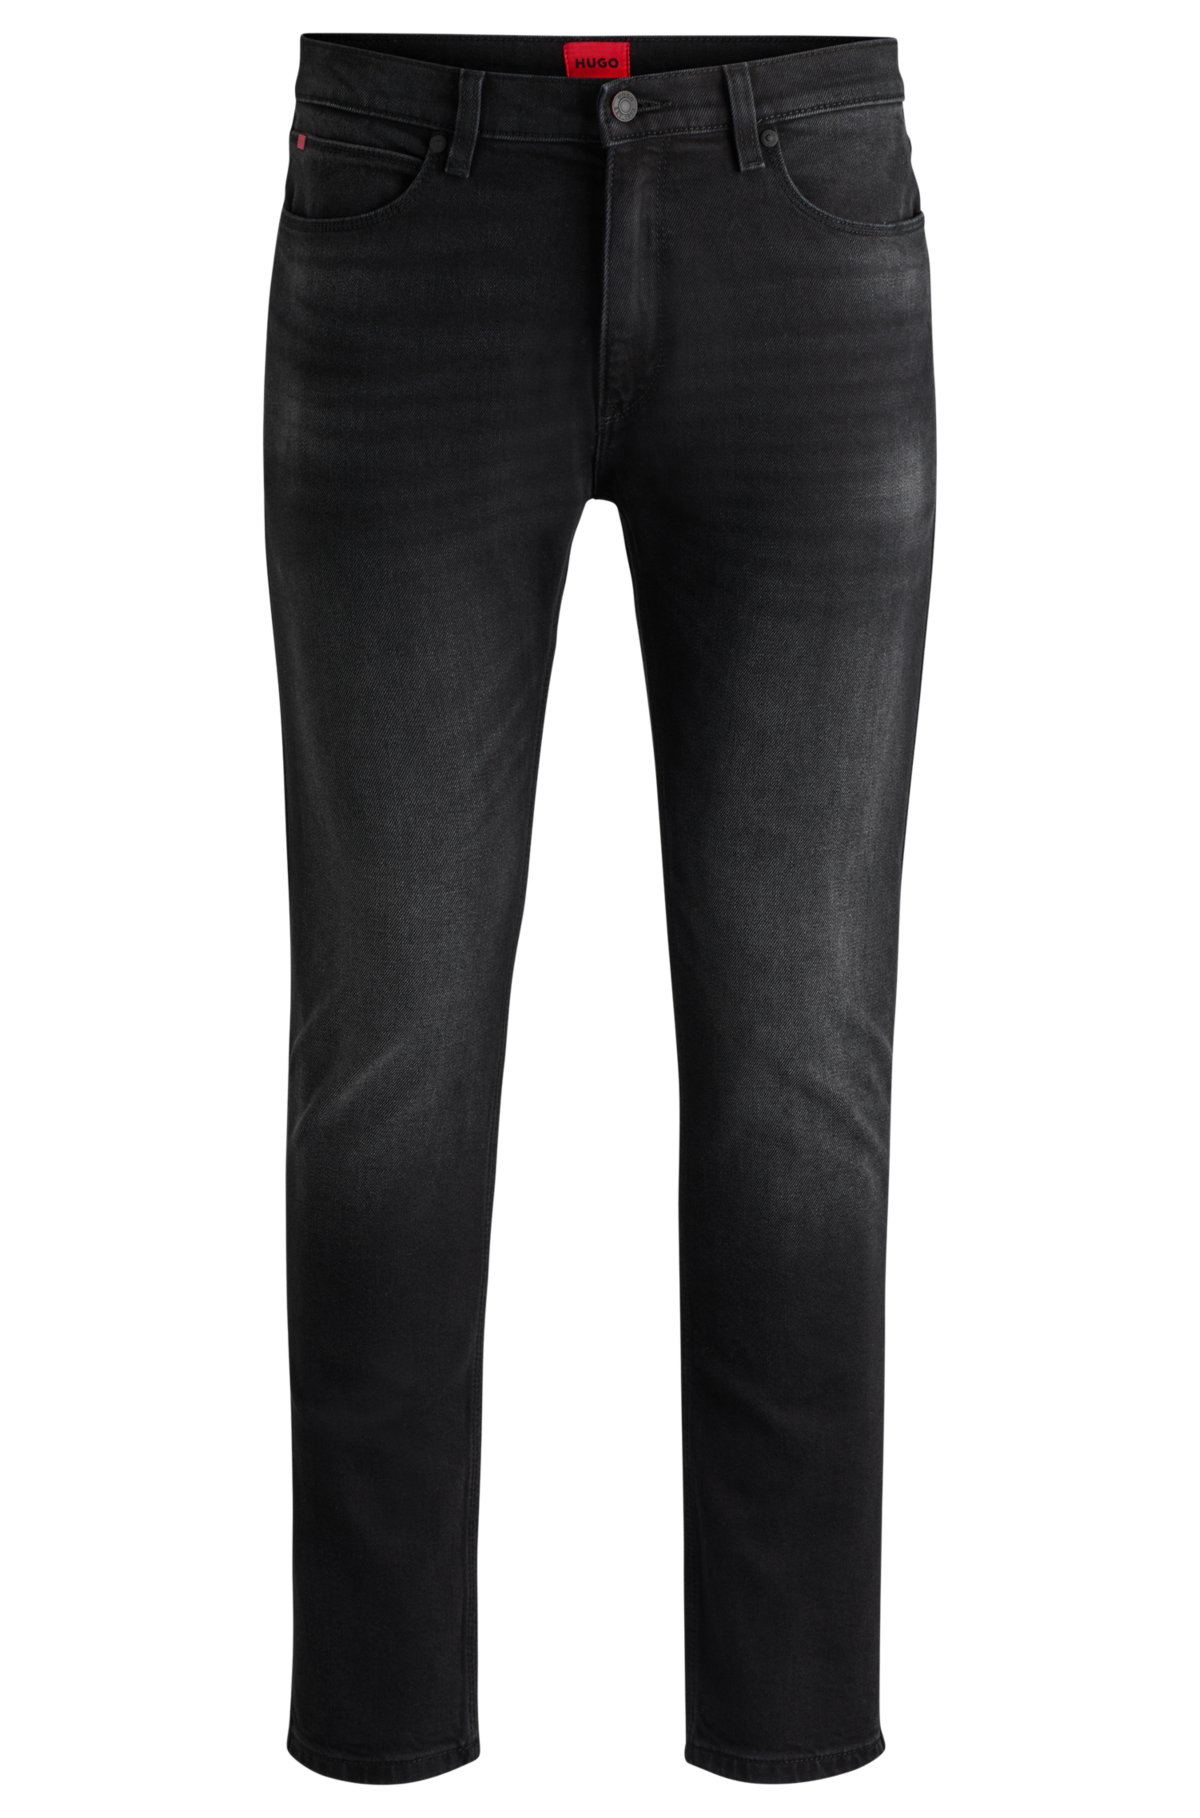 Extra-slim-fit jeans in black-black stretch denim, Black